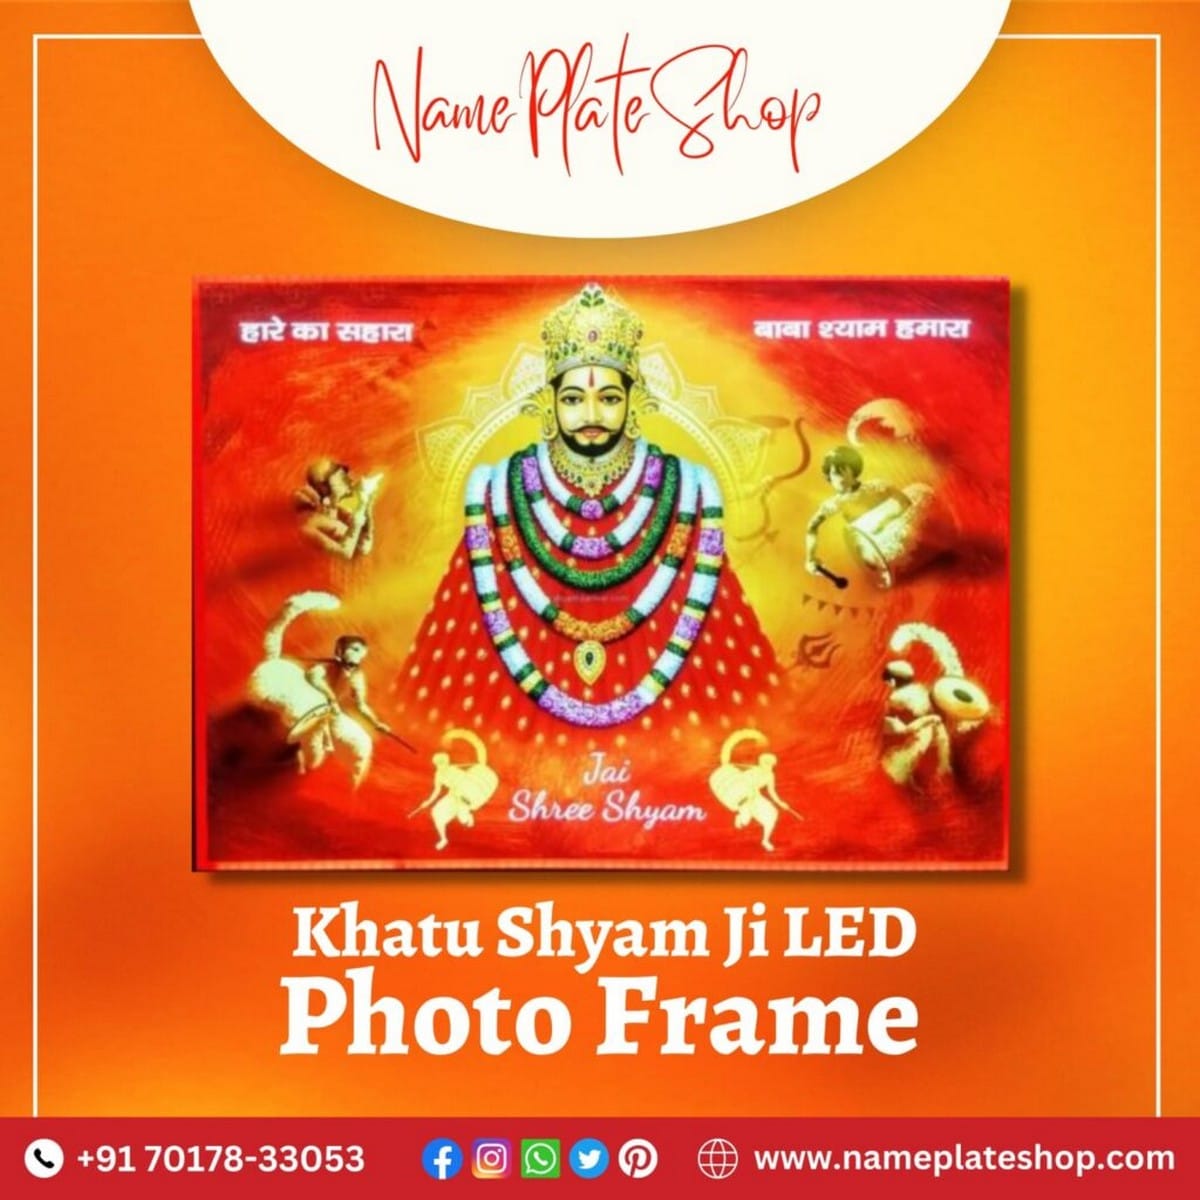 Buy Best LED Photo Frame With Khatu Shyam Ji Print